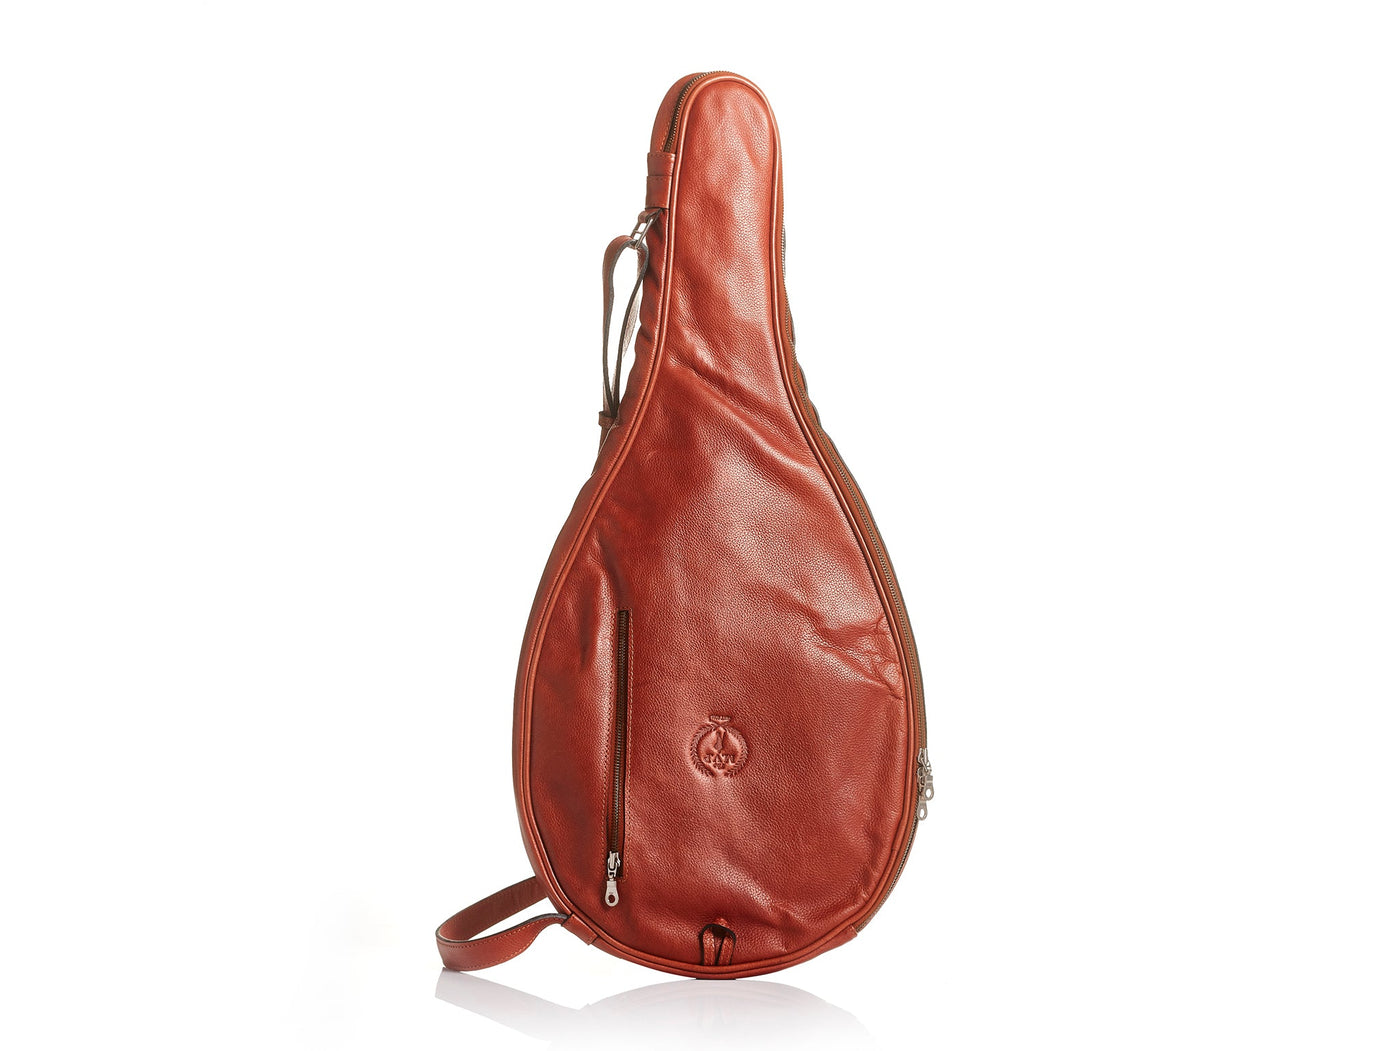 RETRO Heritage Leather Tennis Bag - MODEST VINTAGE PLAYER LTD